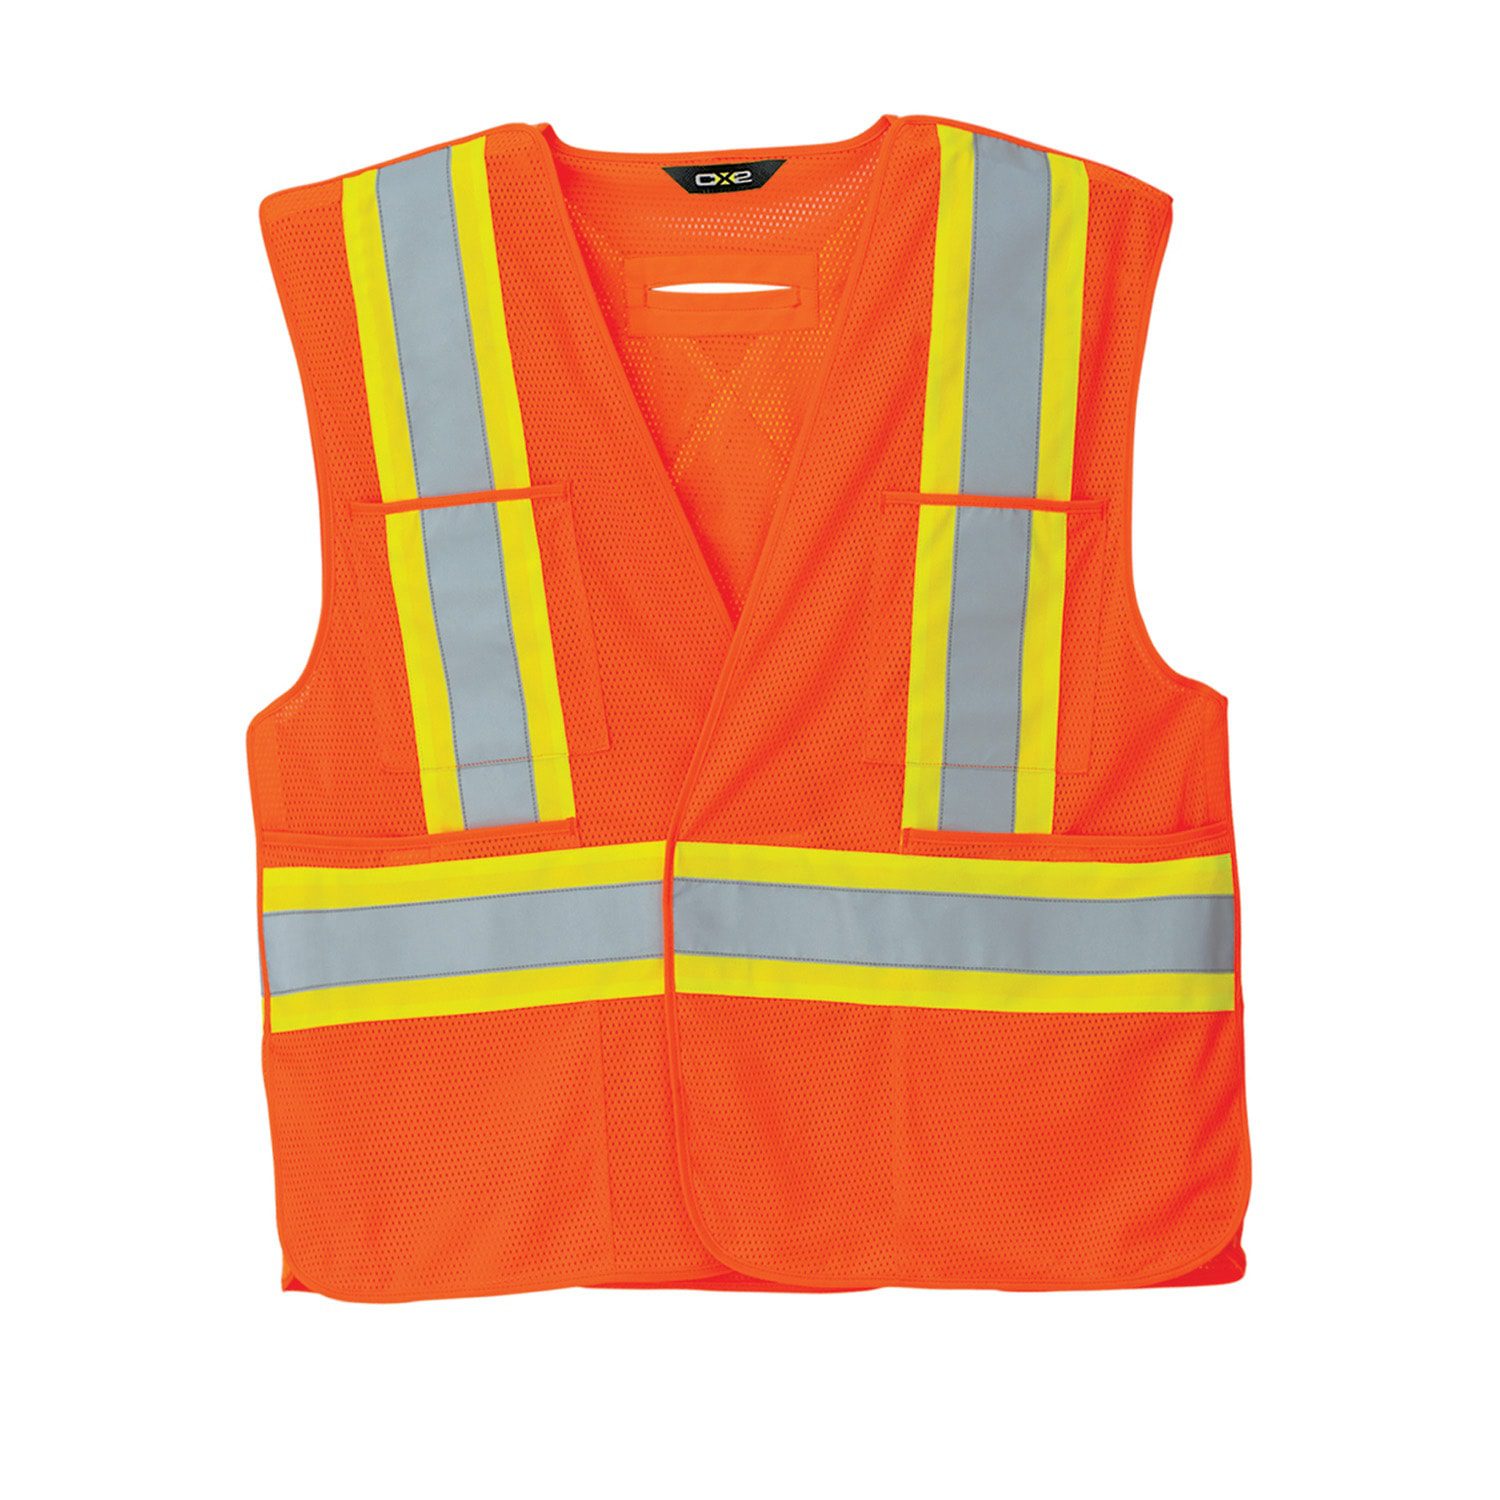 Canada Sportswear Guardian – Hi Vis Safety Vest #L01160 Orange